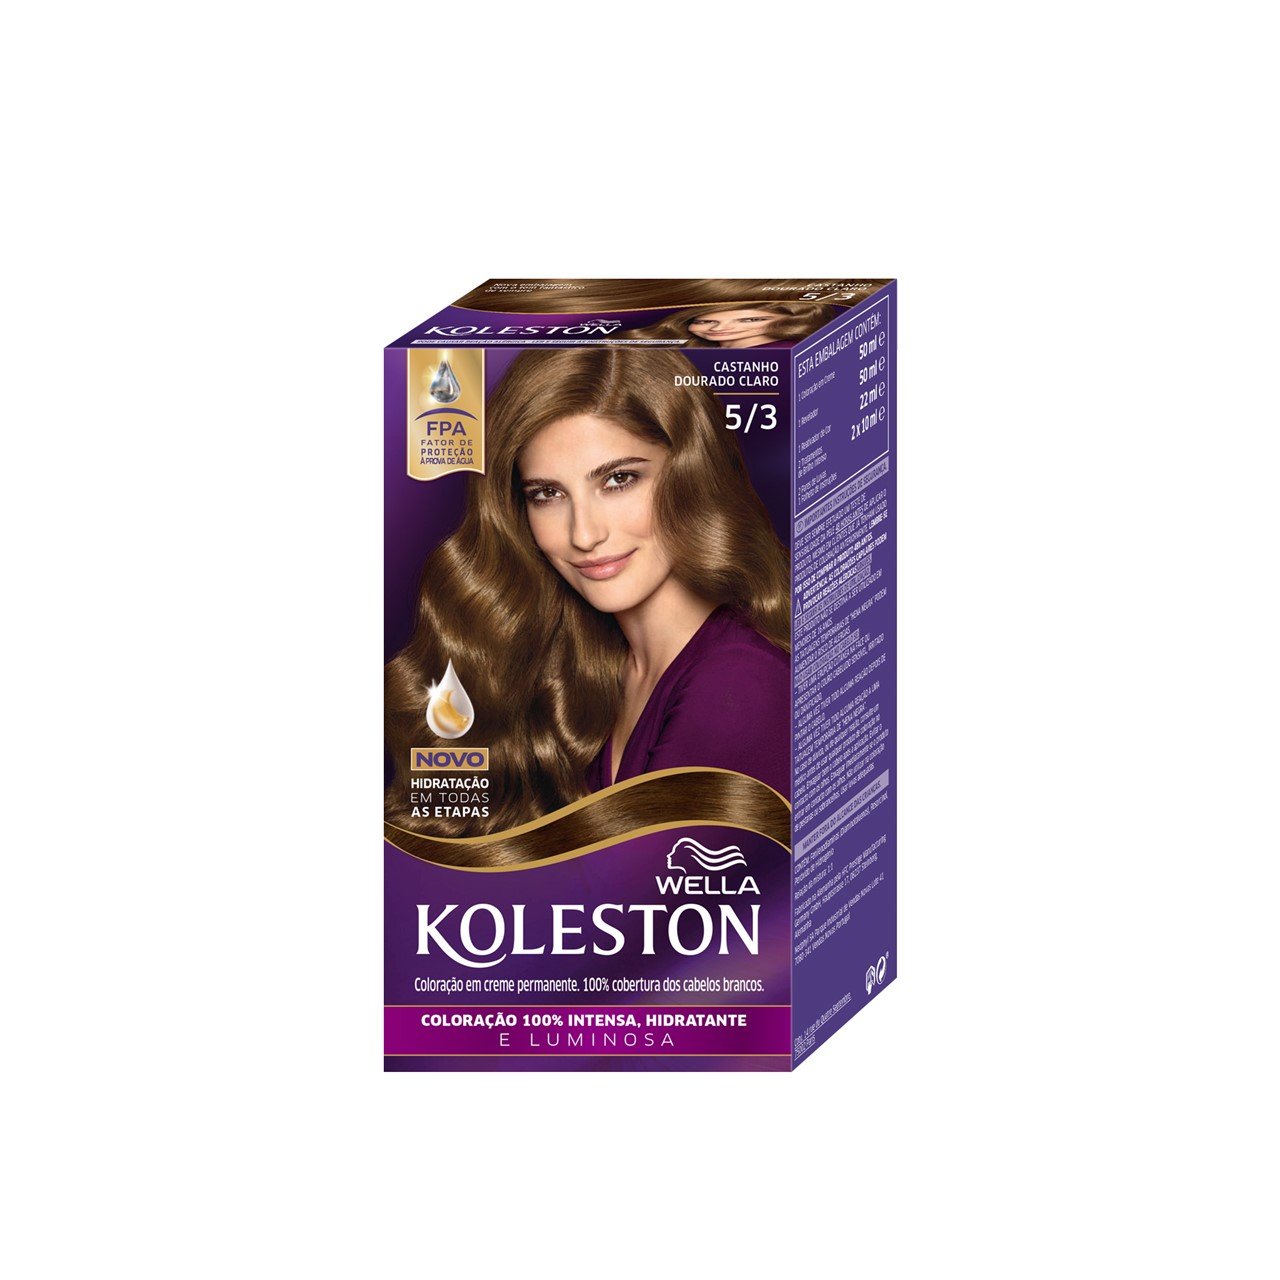 Wella Koleston 5/3 Light Golden Brown Permanent Hair Color